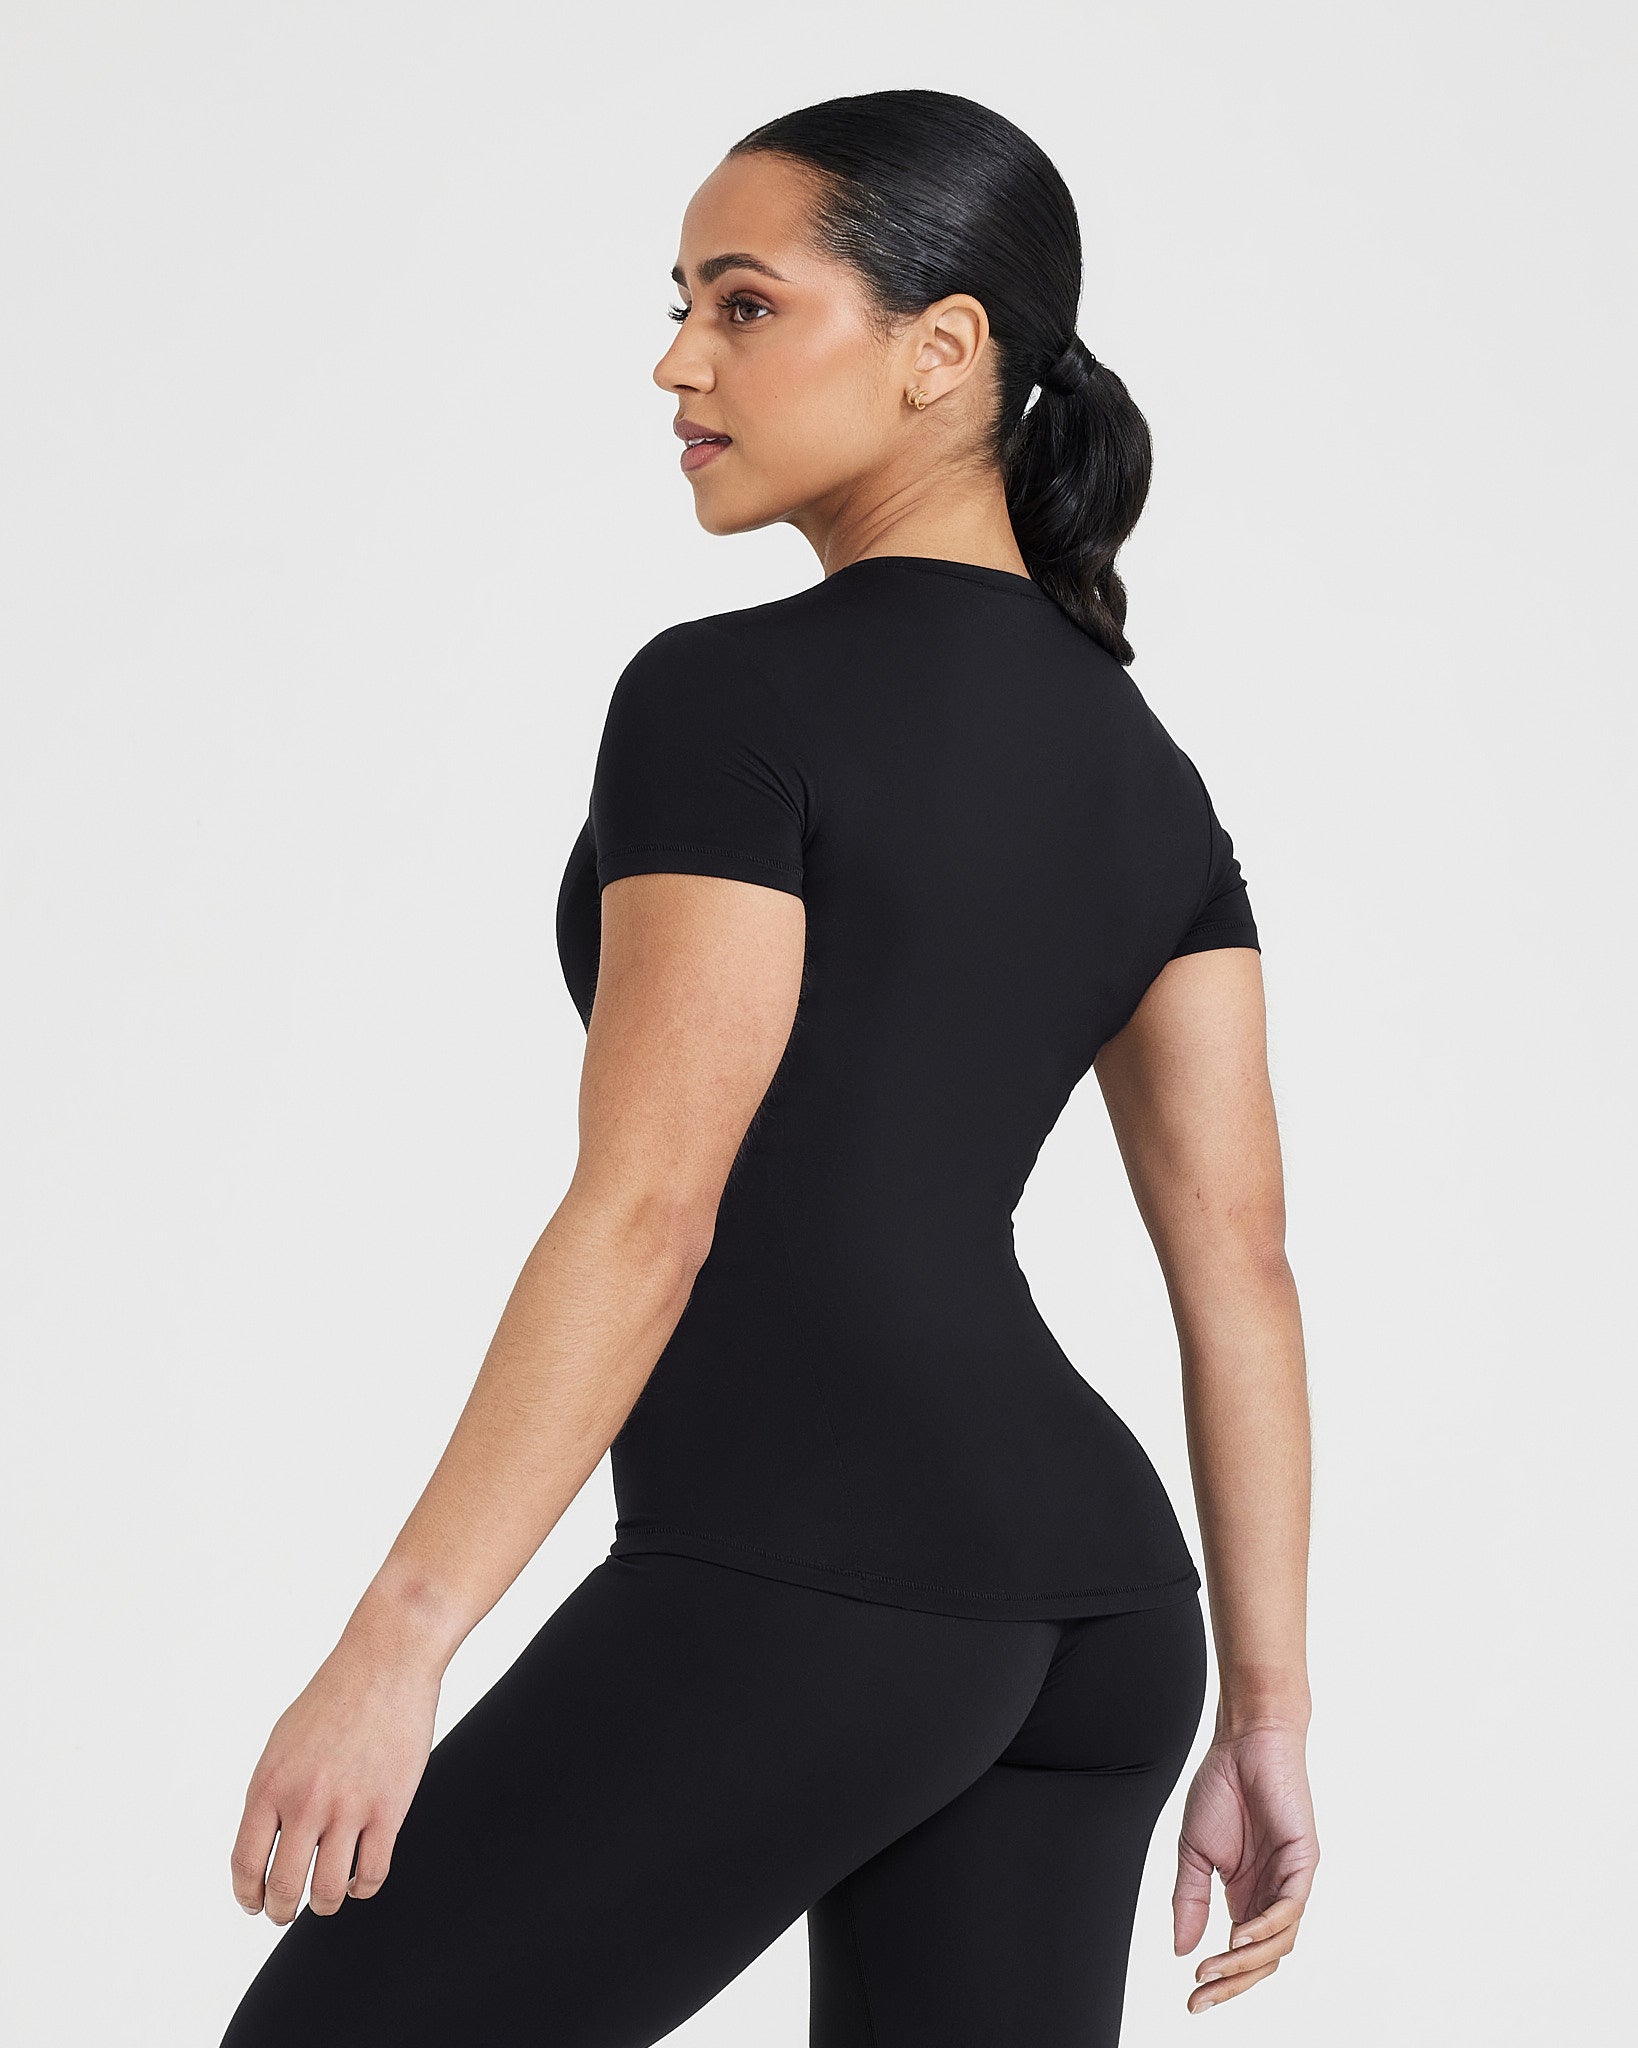 Black Shirt Women's Short Sleeve - Regular Length | Oner Active US